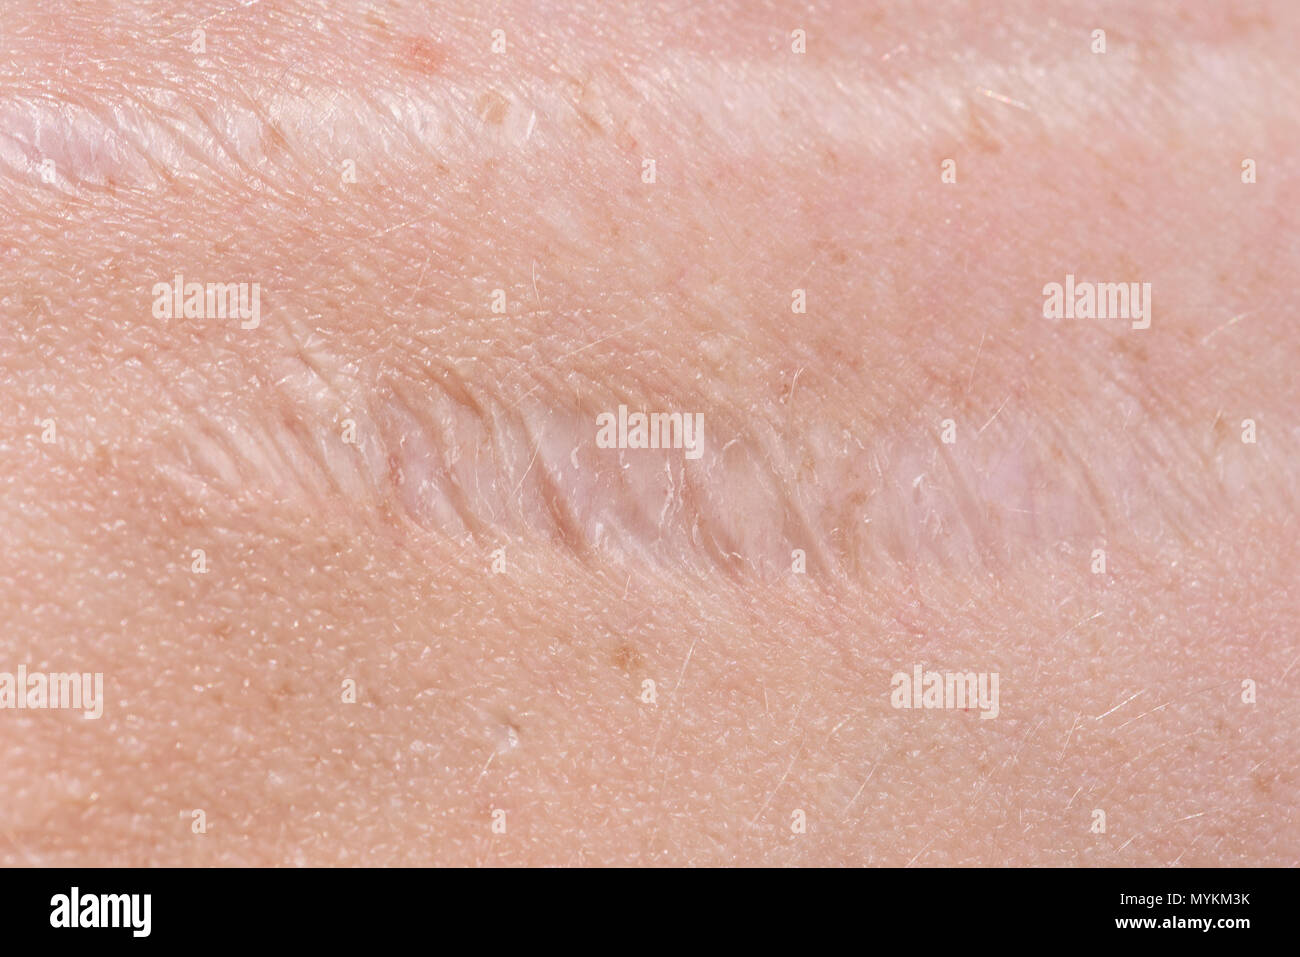 scar on the skin Stock Photo